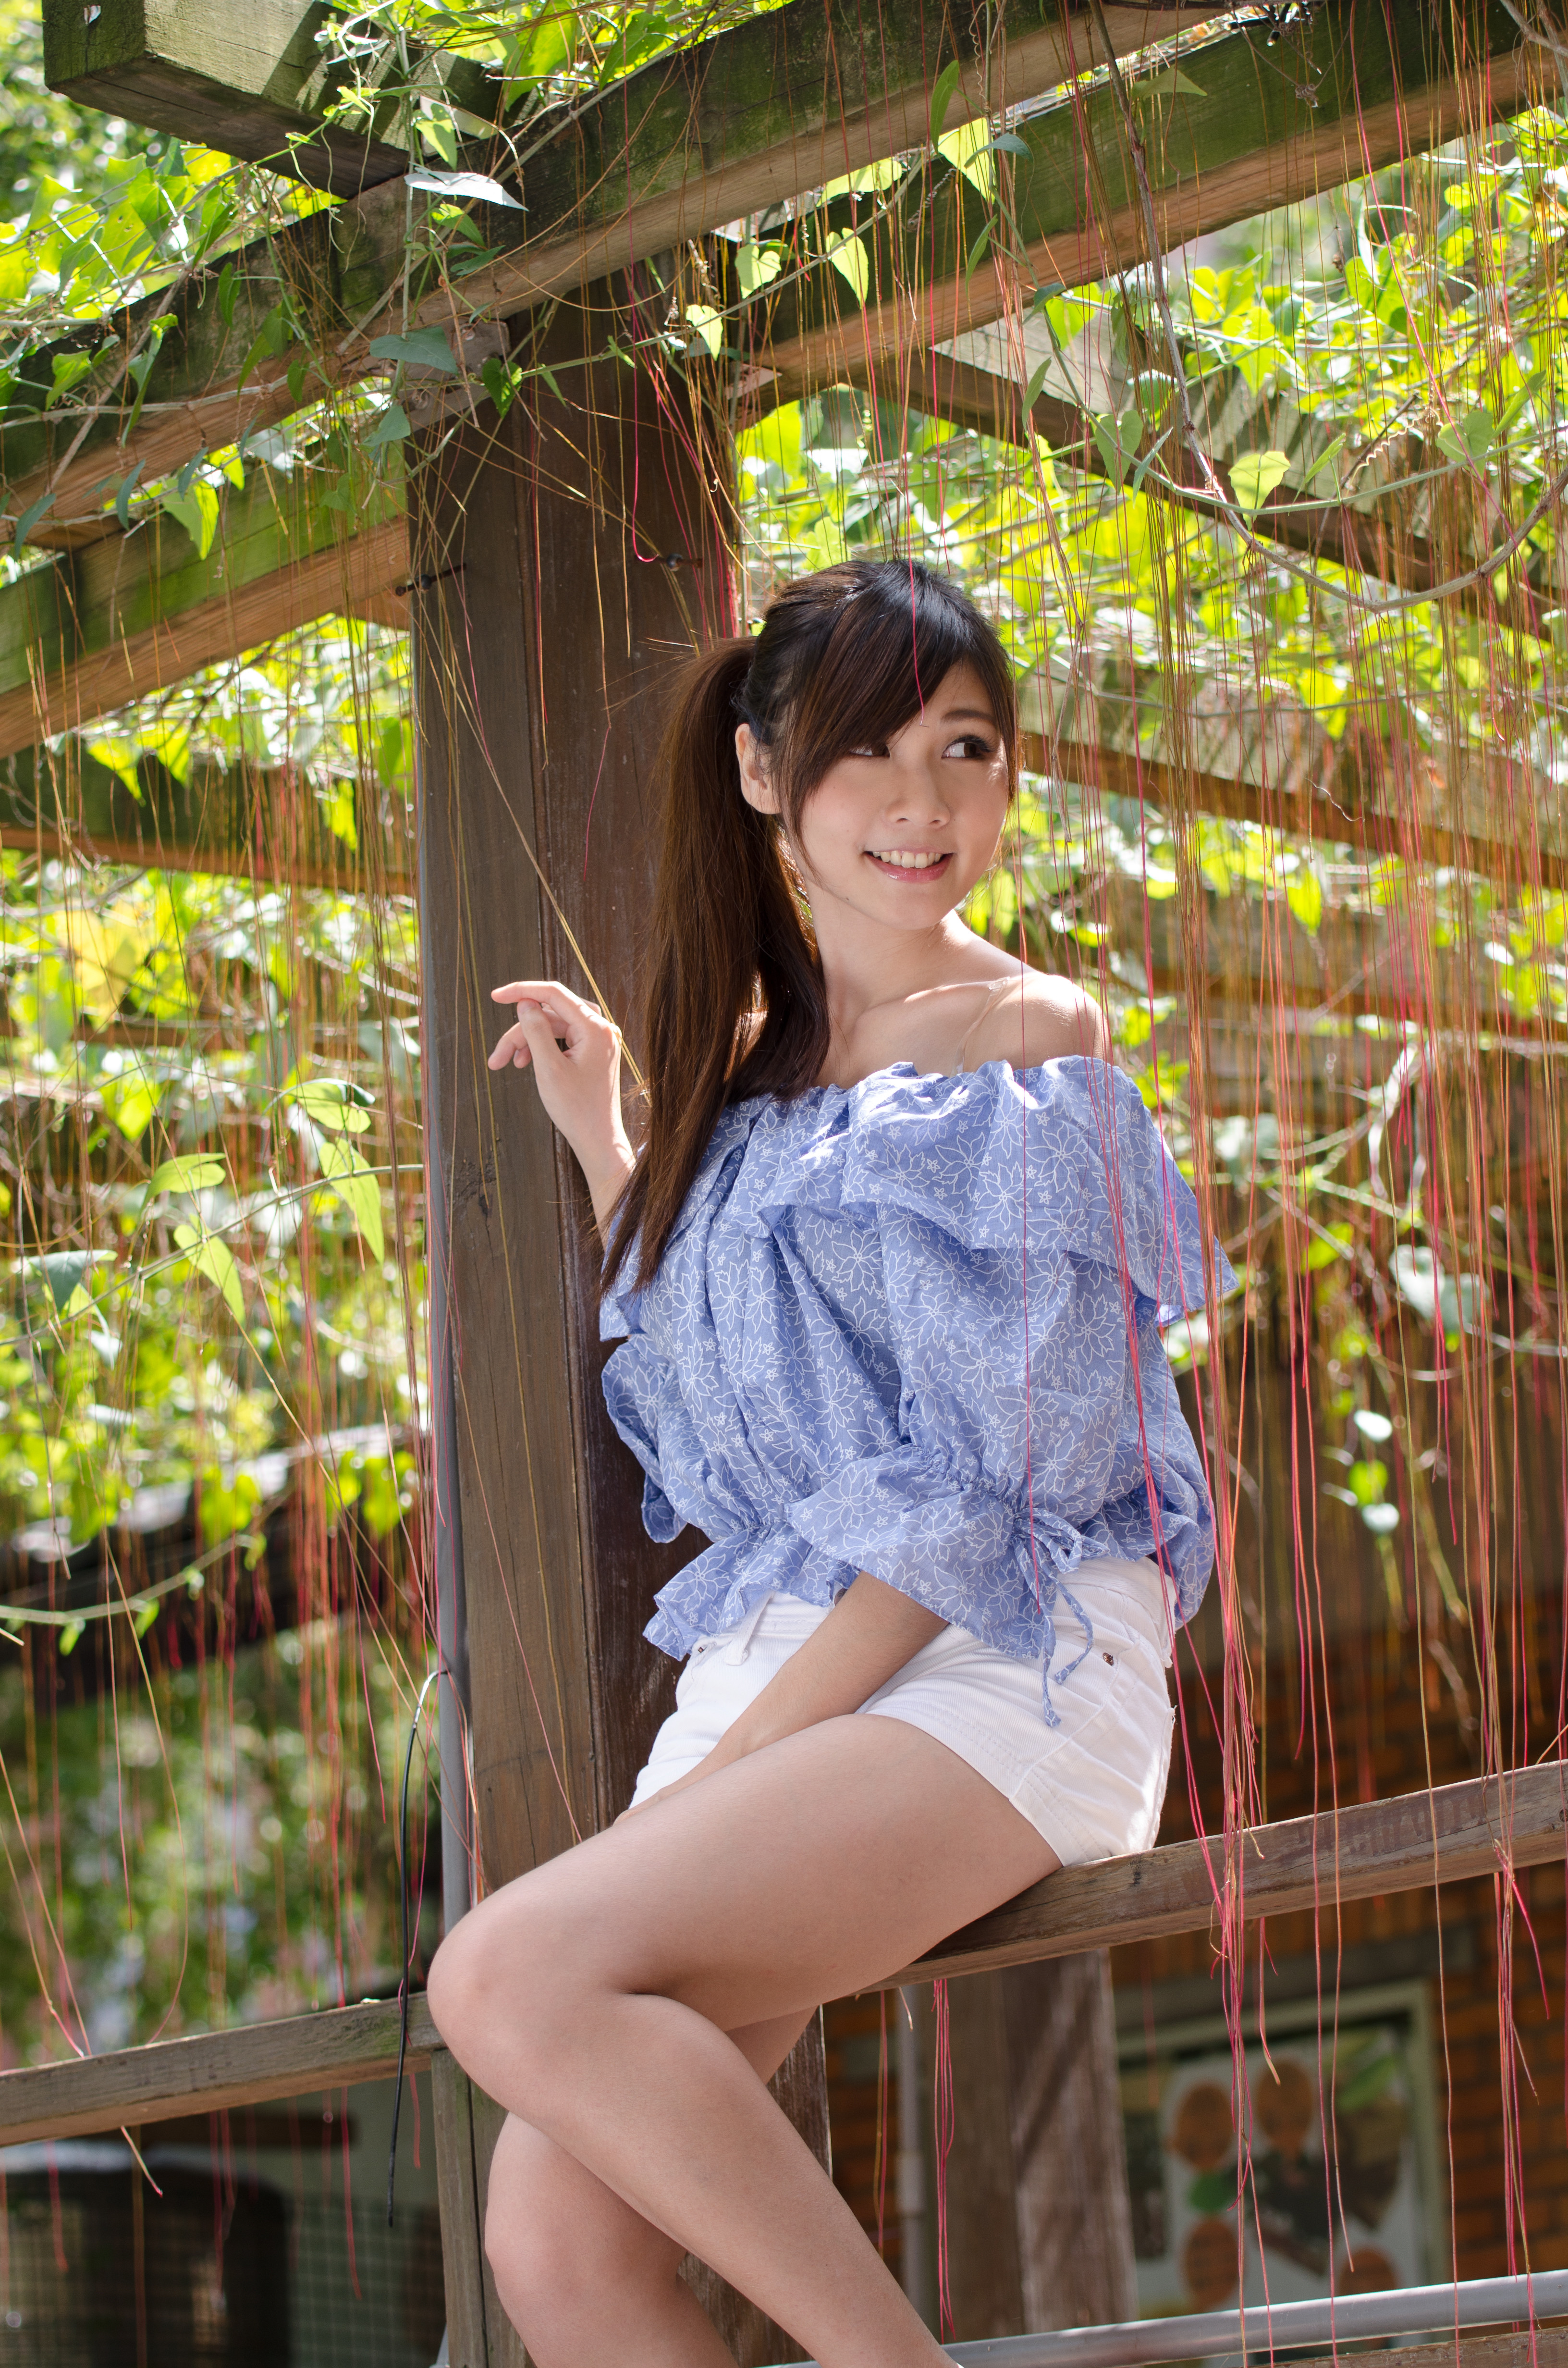 Model Asian Women Brunette Ponytail Smiling Shorts Women Outdoors Portrait Display Robin Huang 3264x4928